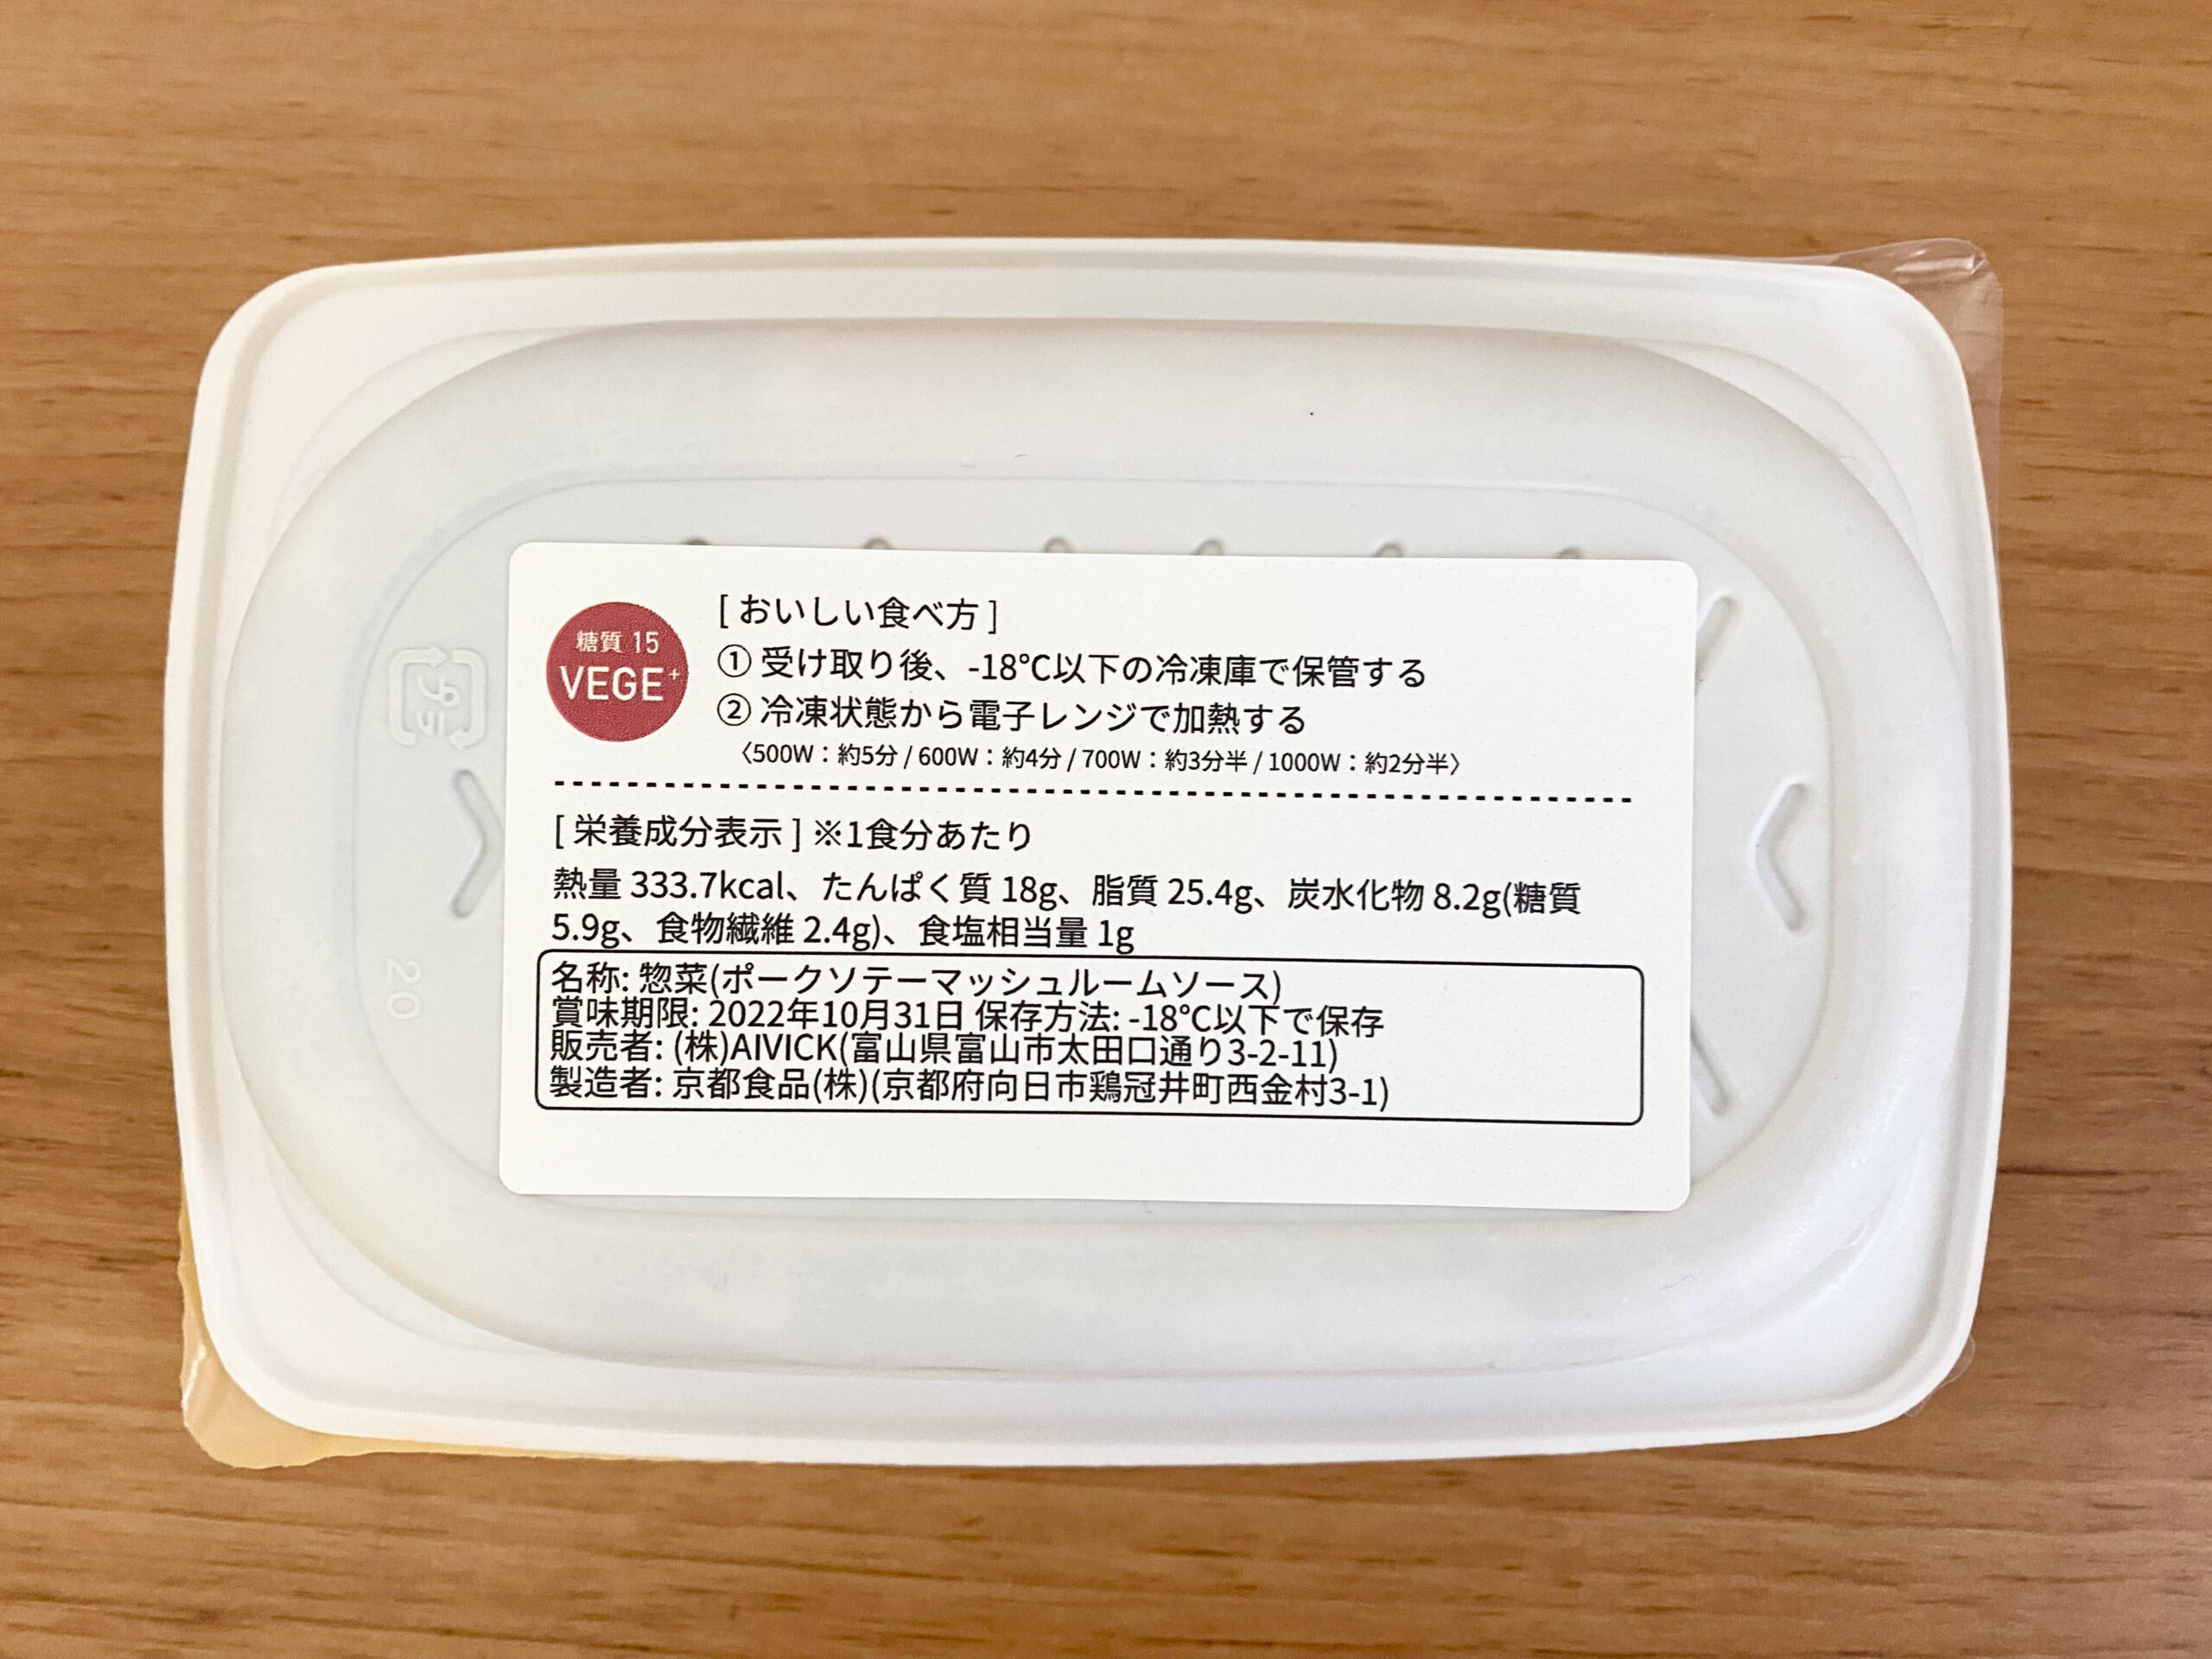 FIT FOOD HOME_低糖質VEGE＋_ポークソテーマッシュルームソース_栄養成分表示